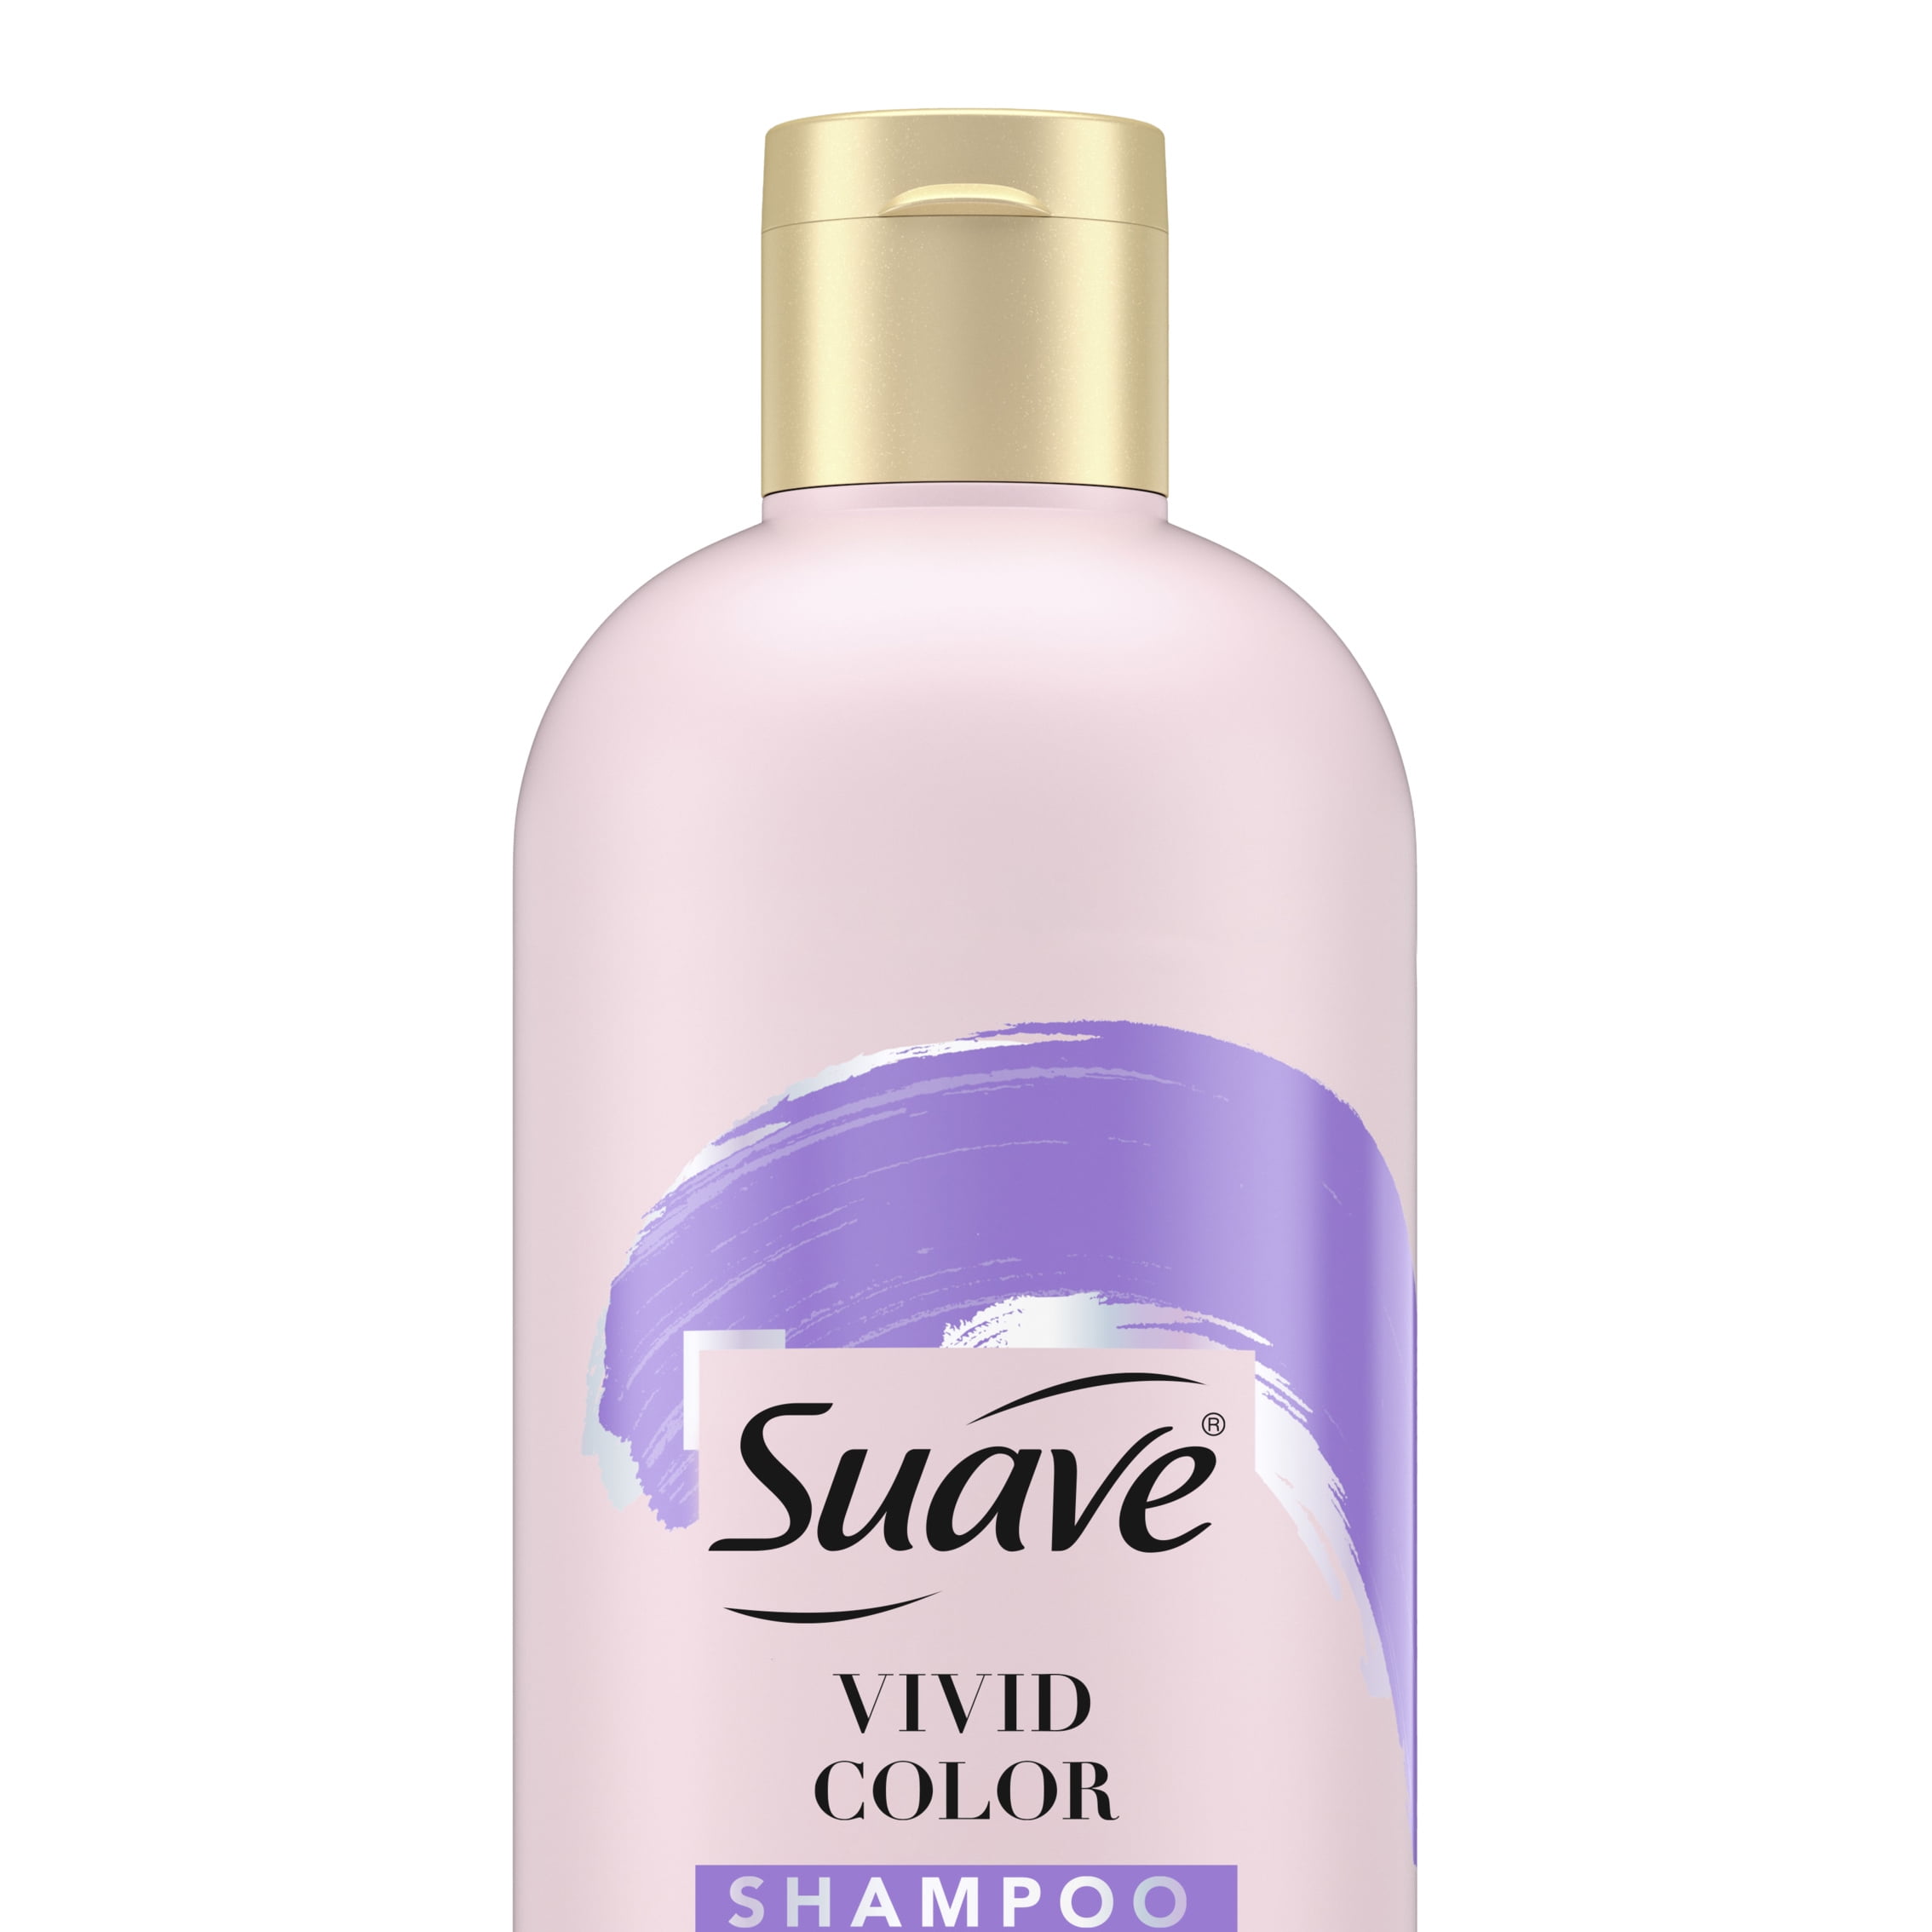 Eddike titel varsel Suave Vivid Color with Amino Acid Complex Shampoo 16.5 fl oz - Walmart.com